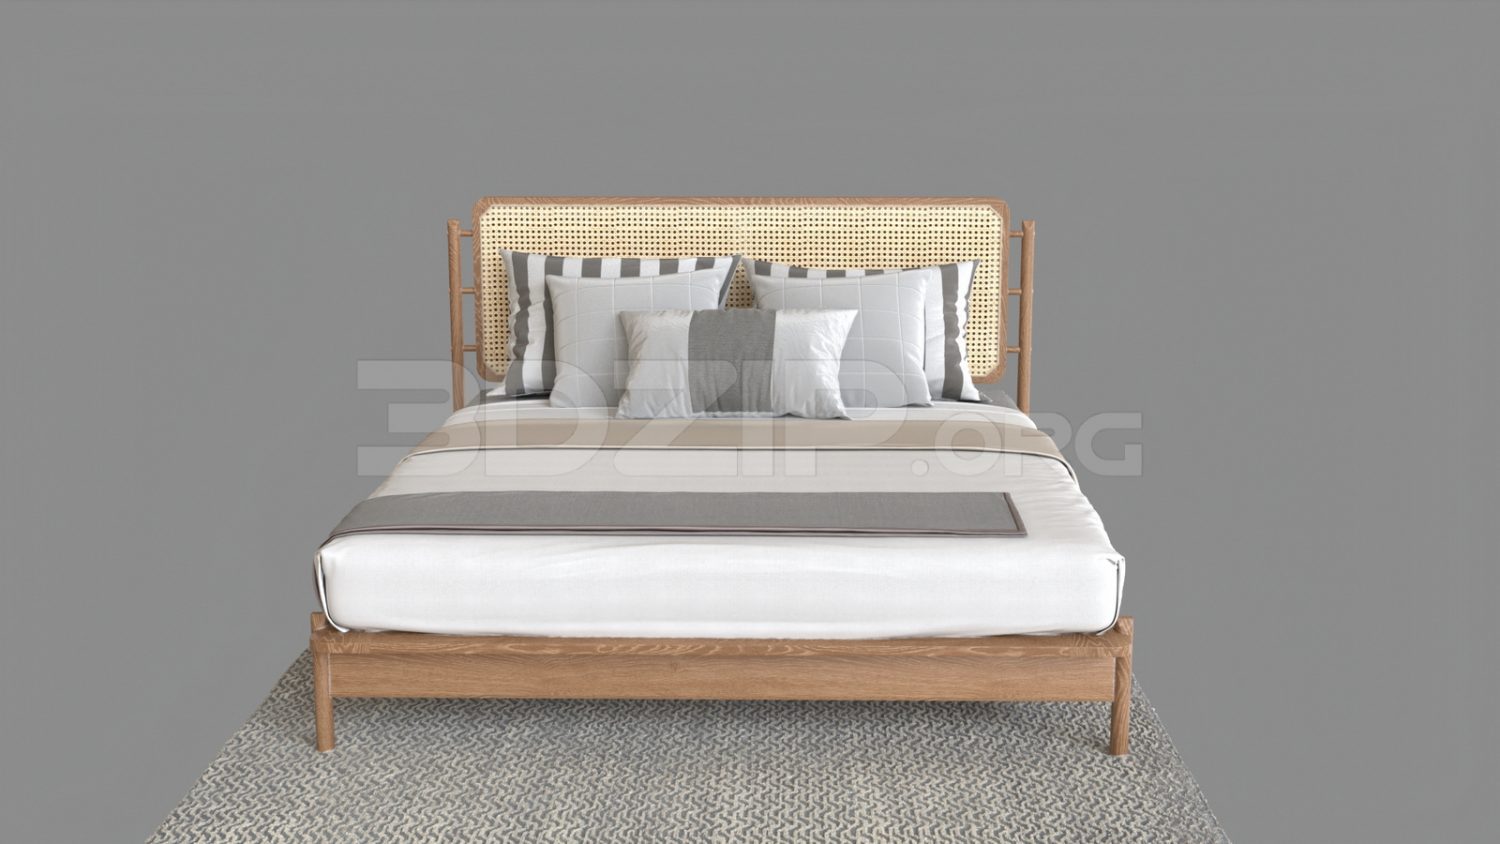 5081. Free 3D Bed Model Download